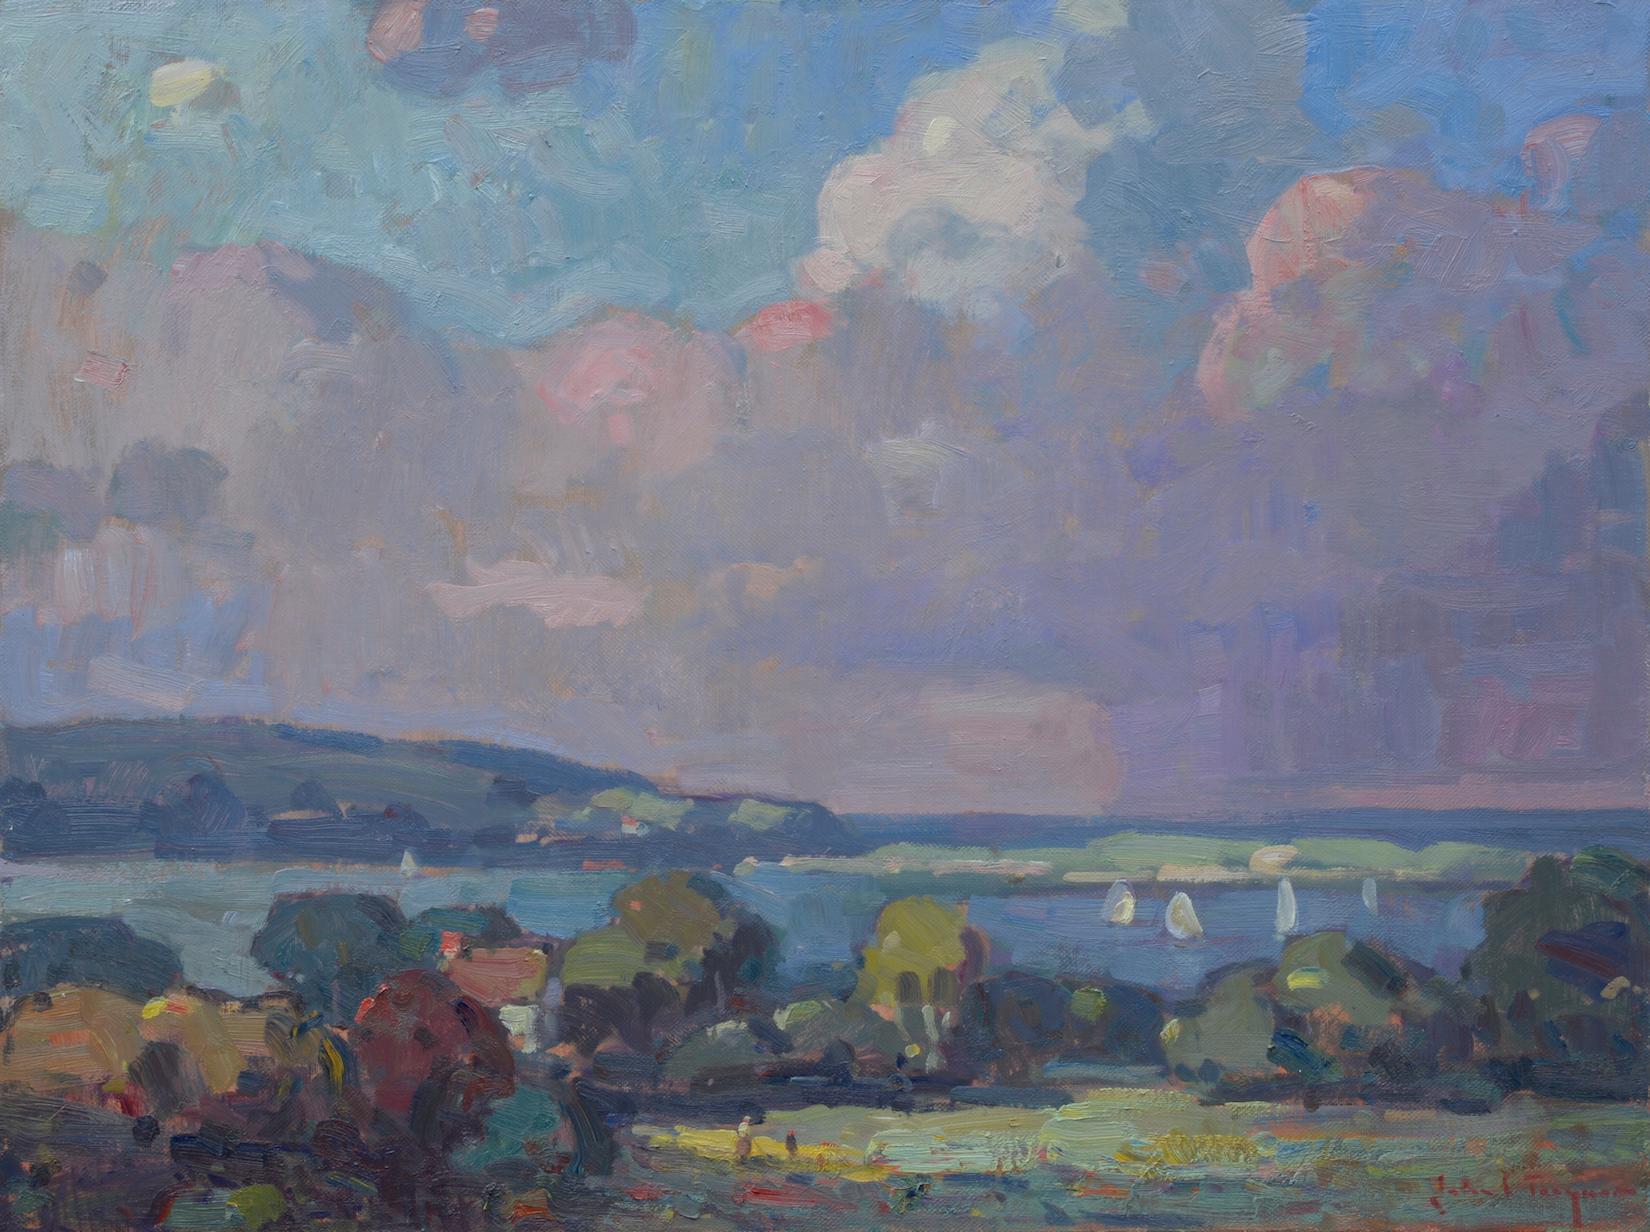 John C. Traynor Landscape Painting - Up Island Races